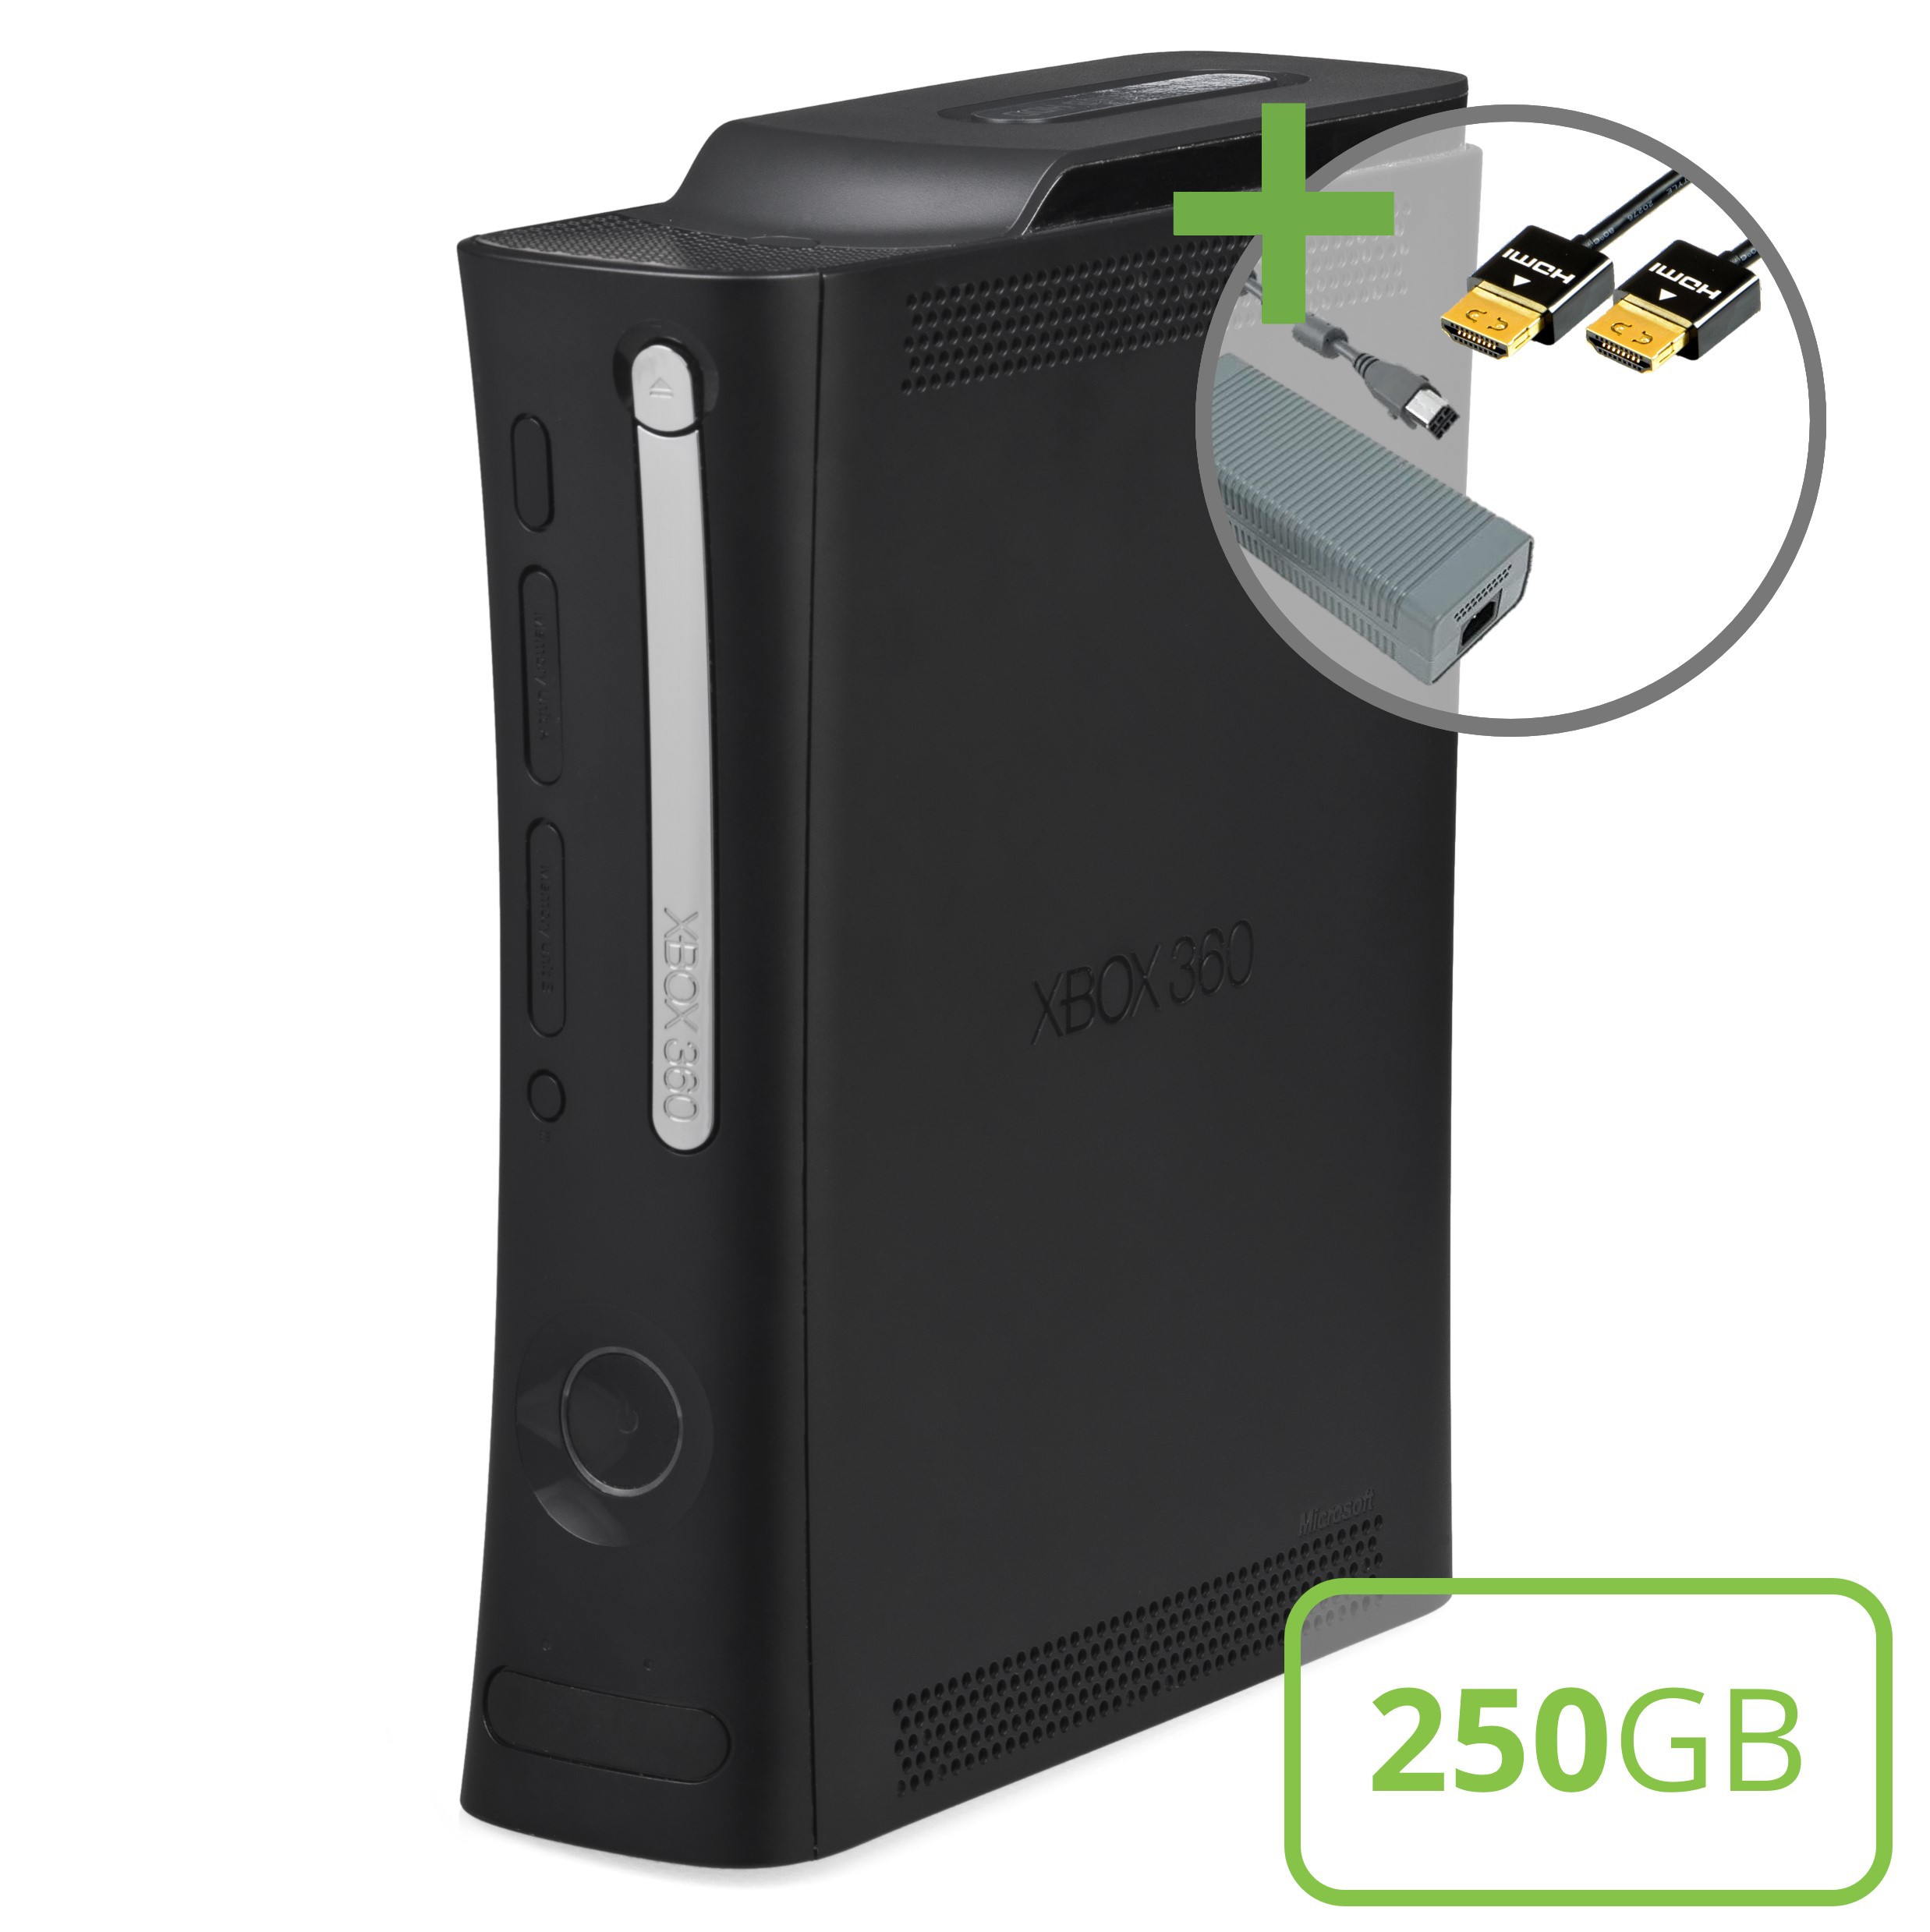 Microsoft Xbox 360 Elite Console (250GB) Kopen | Xbox 360 Hardware